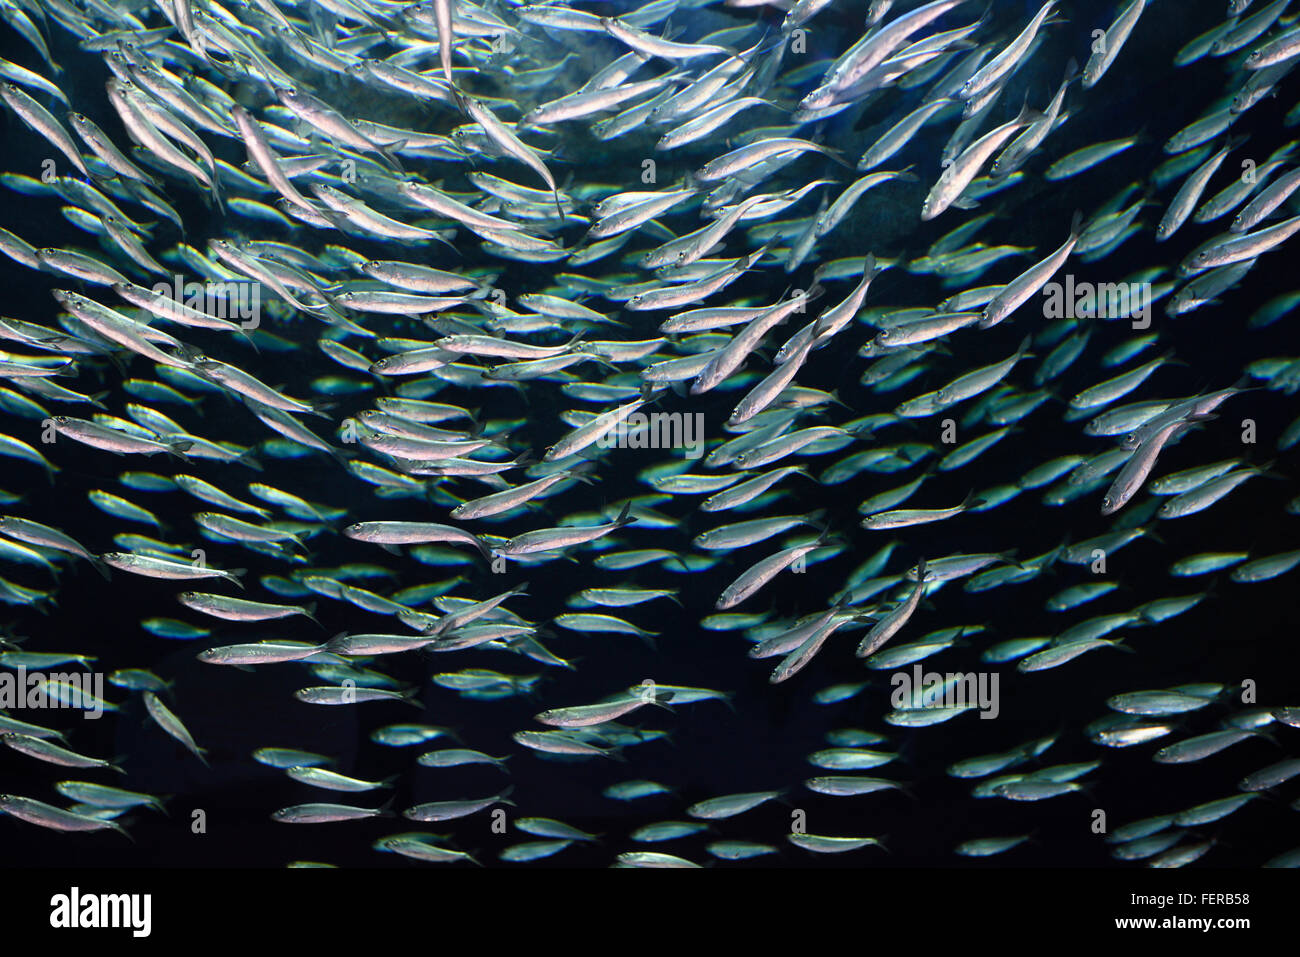 School of circling Alewives herring fish Ripleys Aquarium Toronto Stock Photo